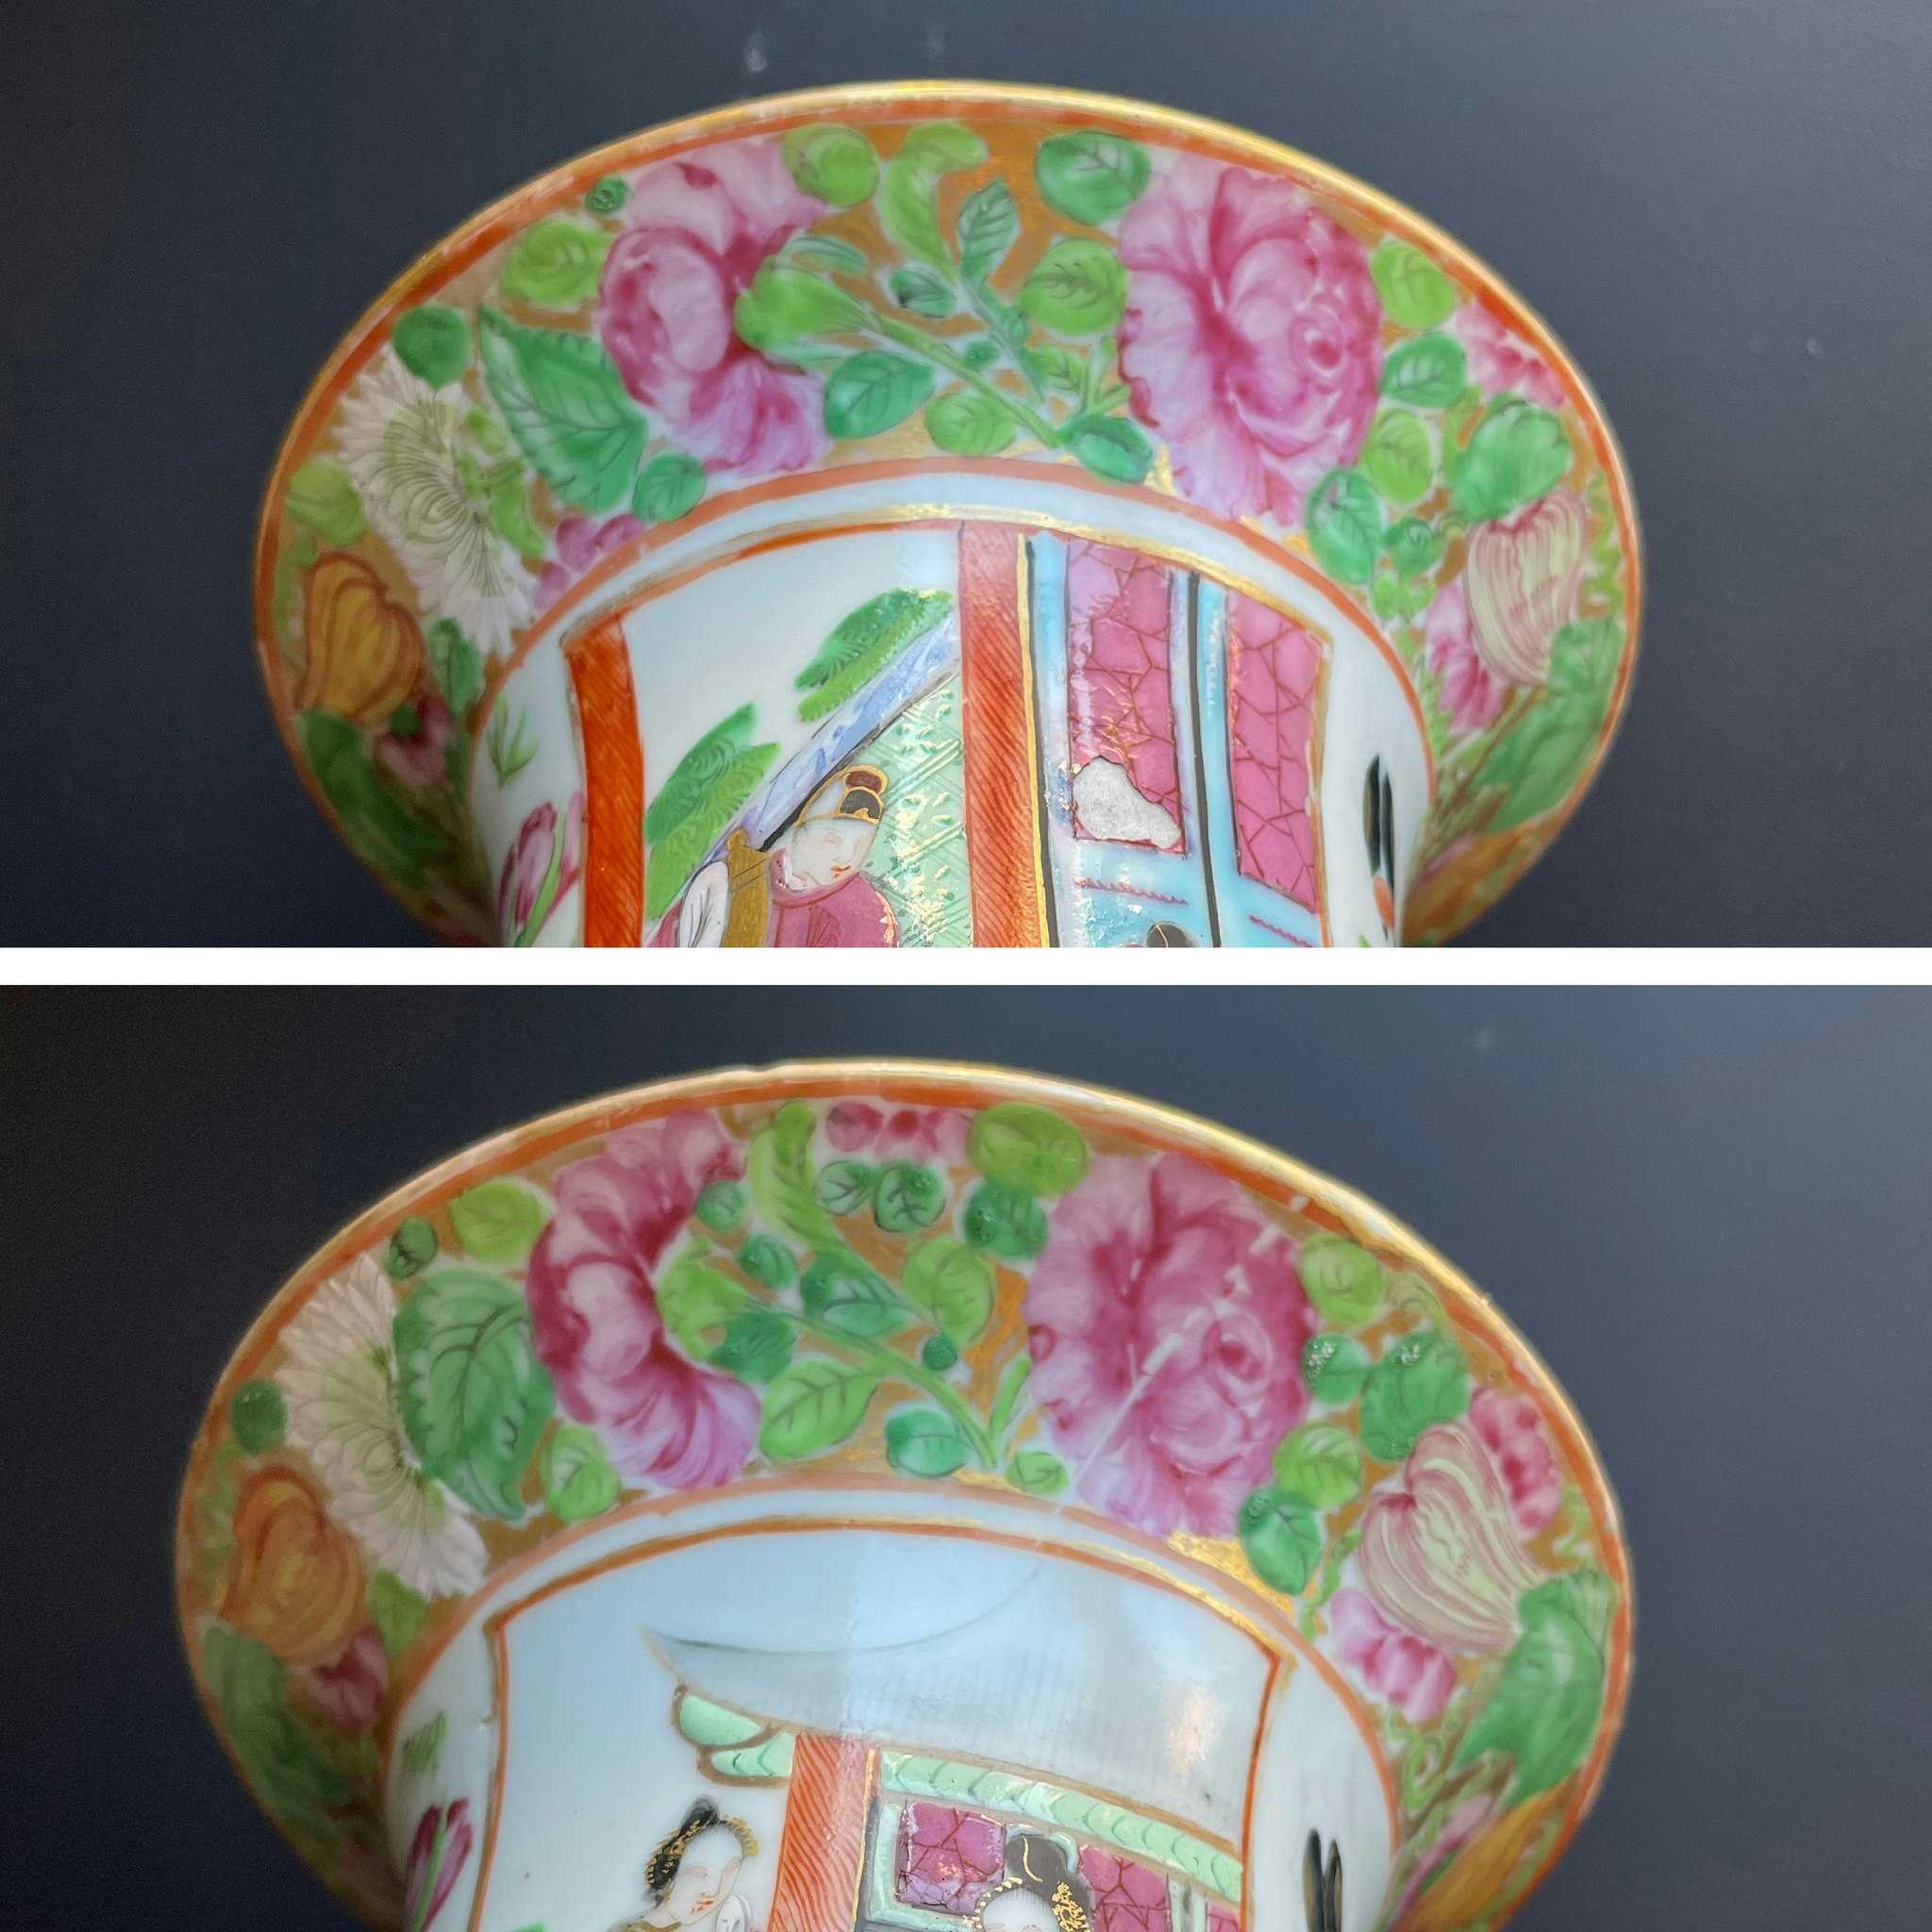 Antique Chinese rose mandarin trumpet vase / Gu vase early 19th century #982